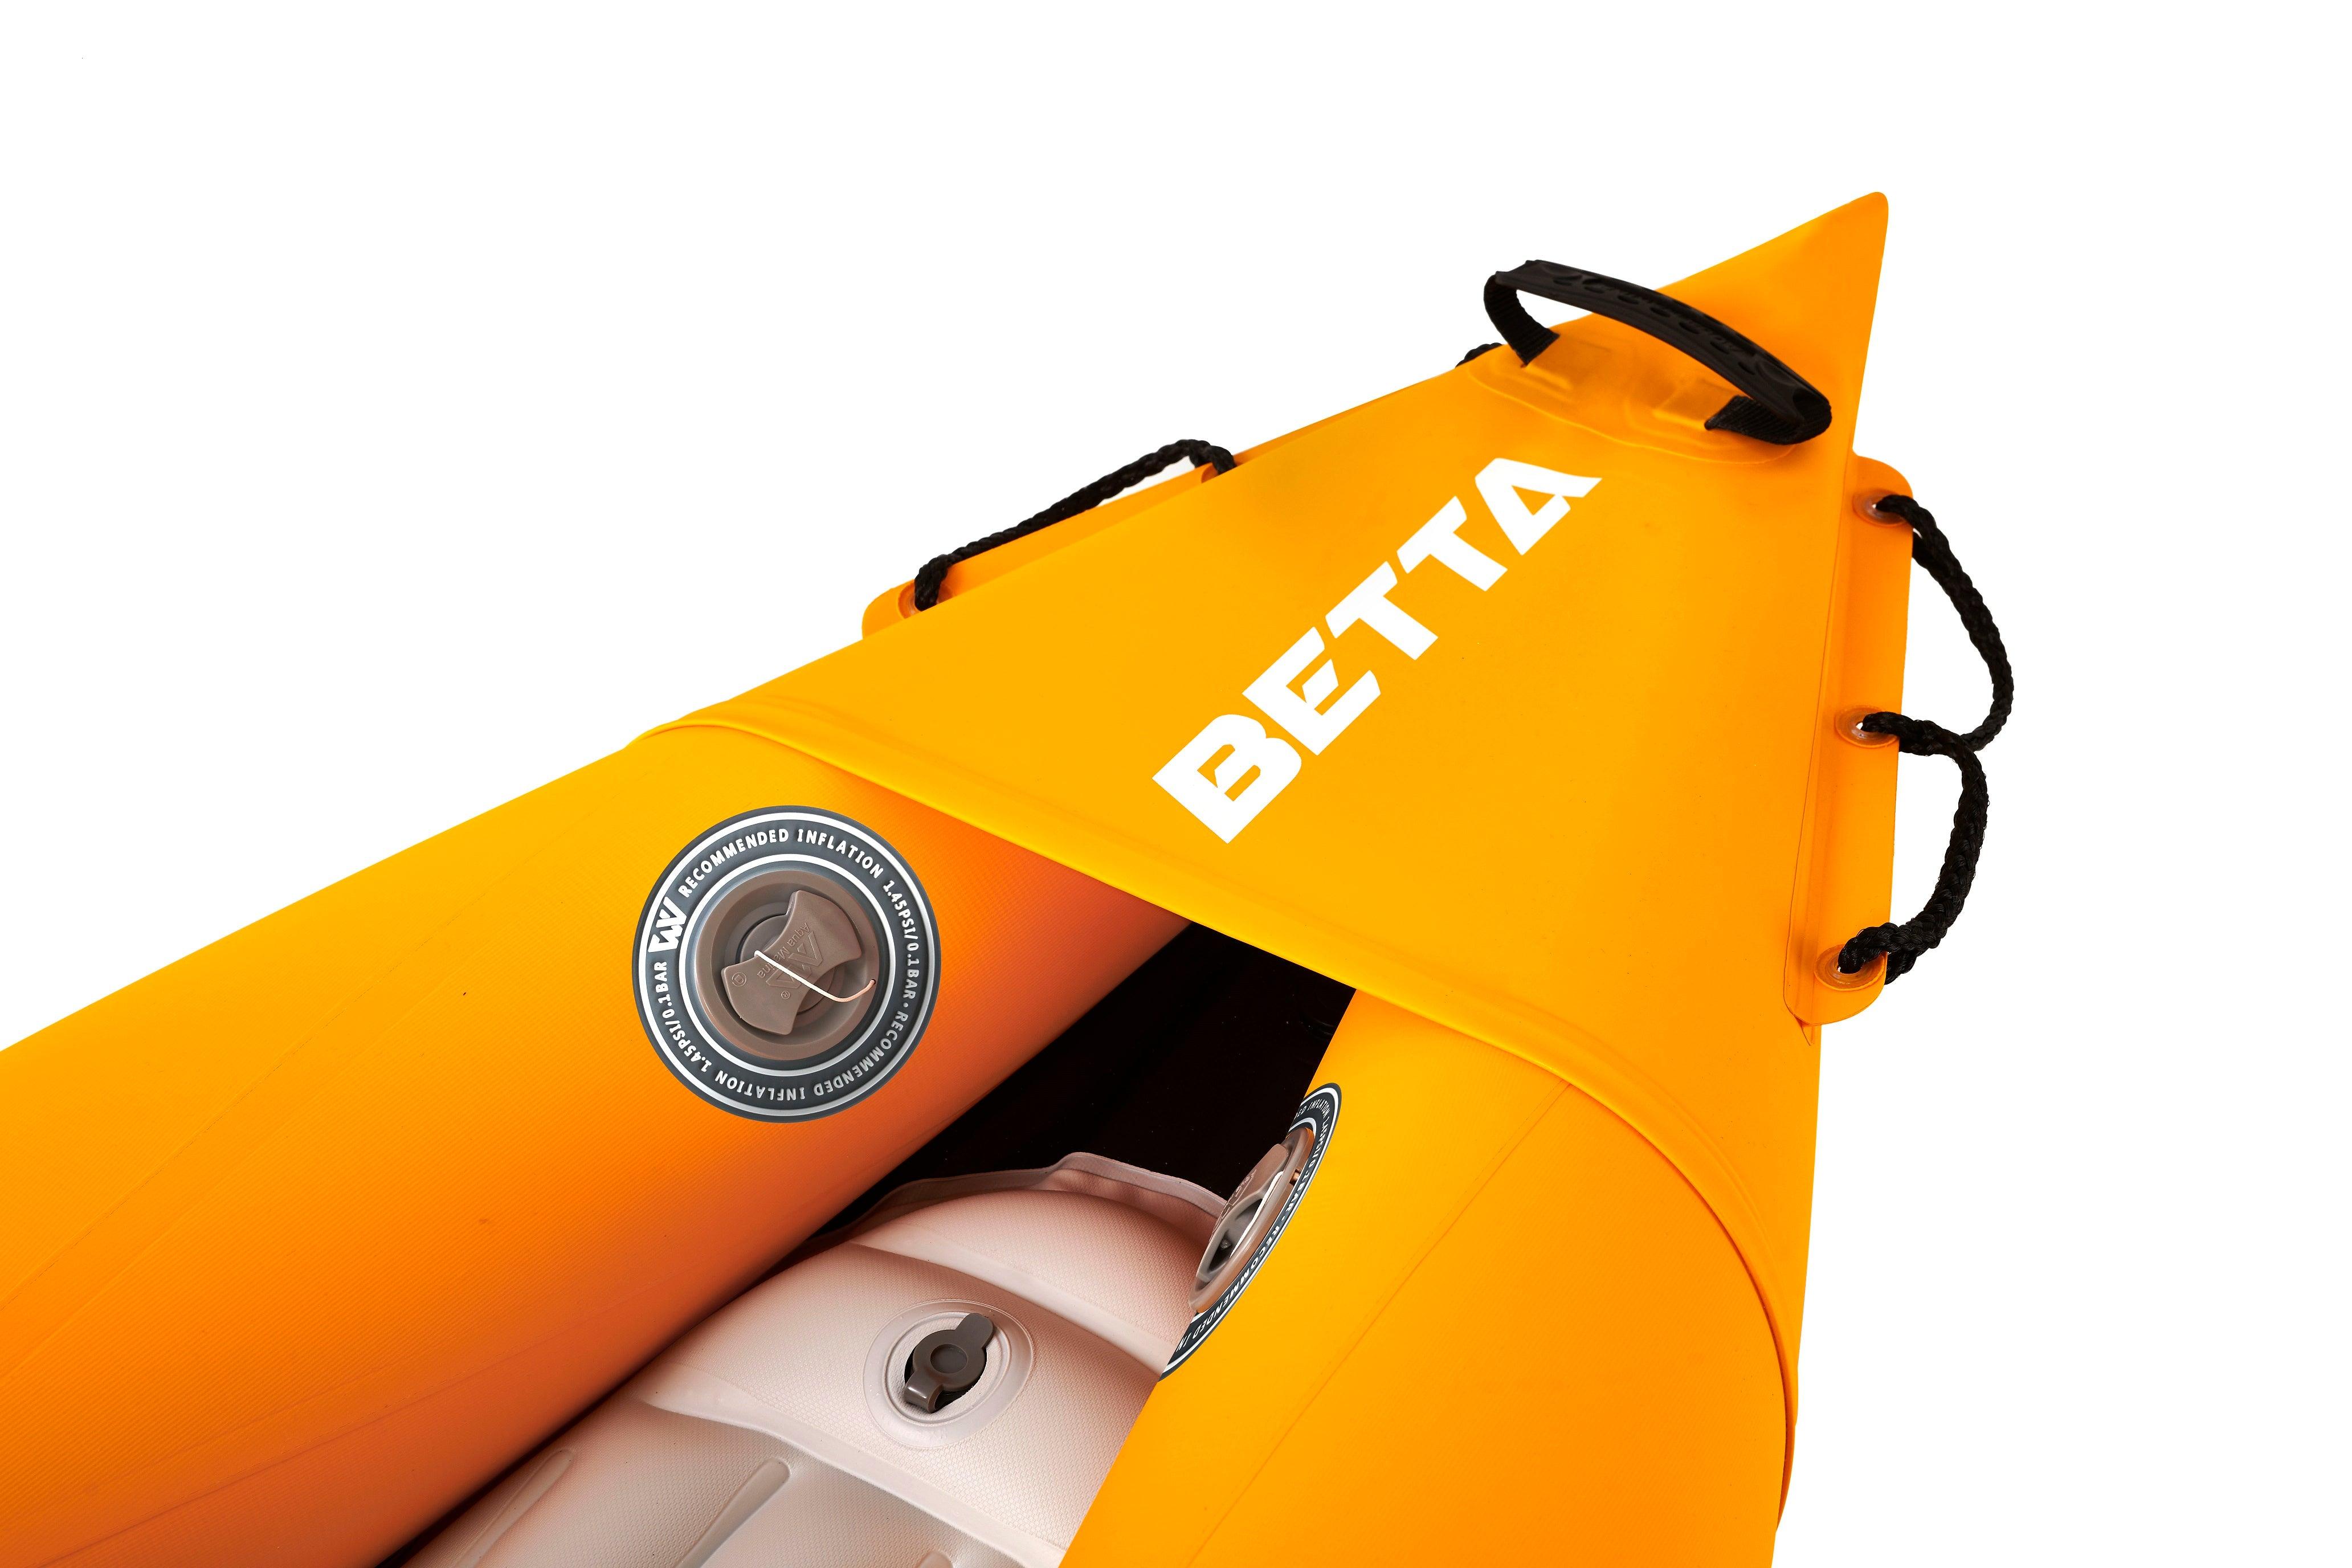 Betta 312 Leisure 1-Person Kayak - DTI Direct USA